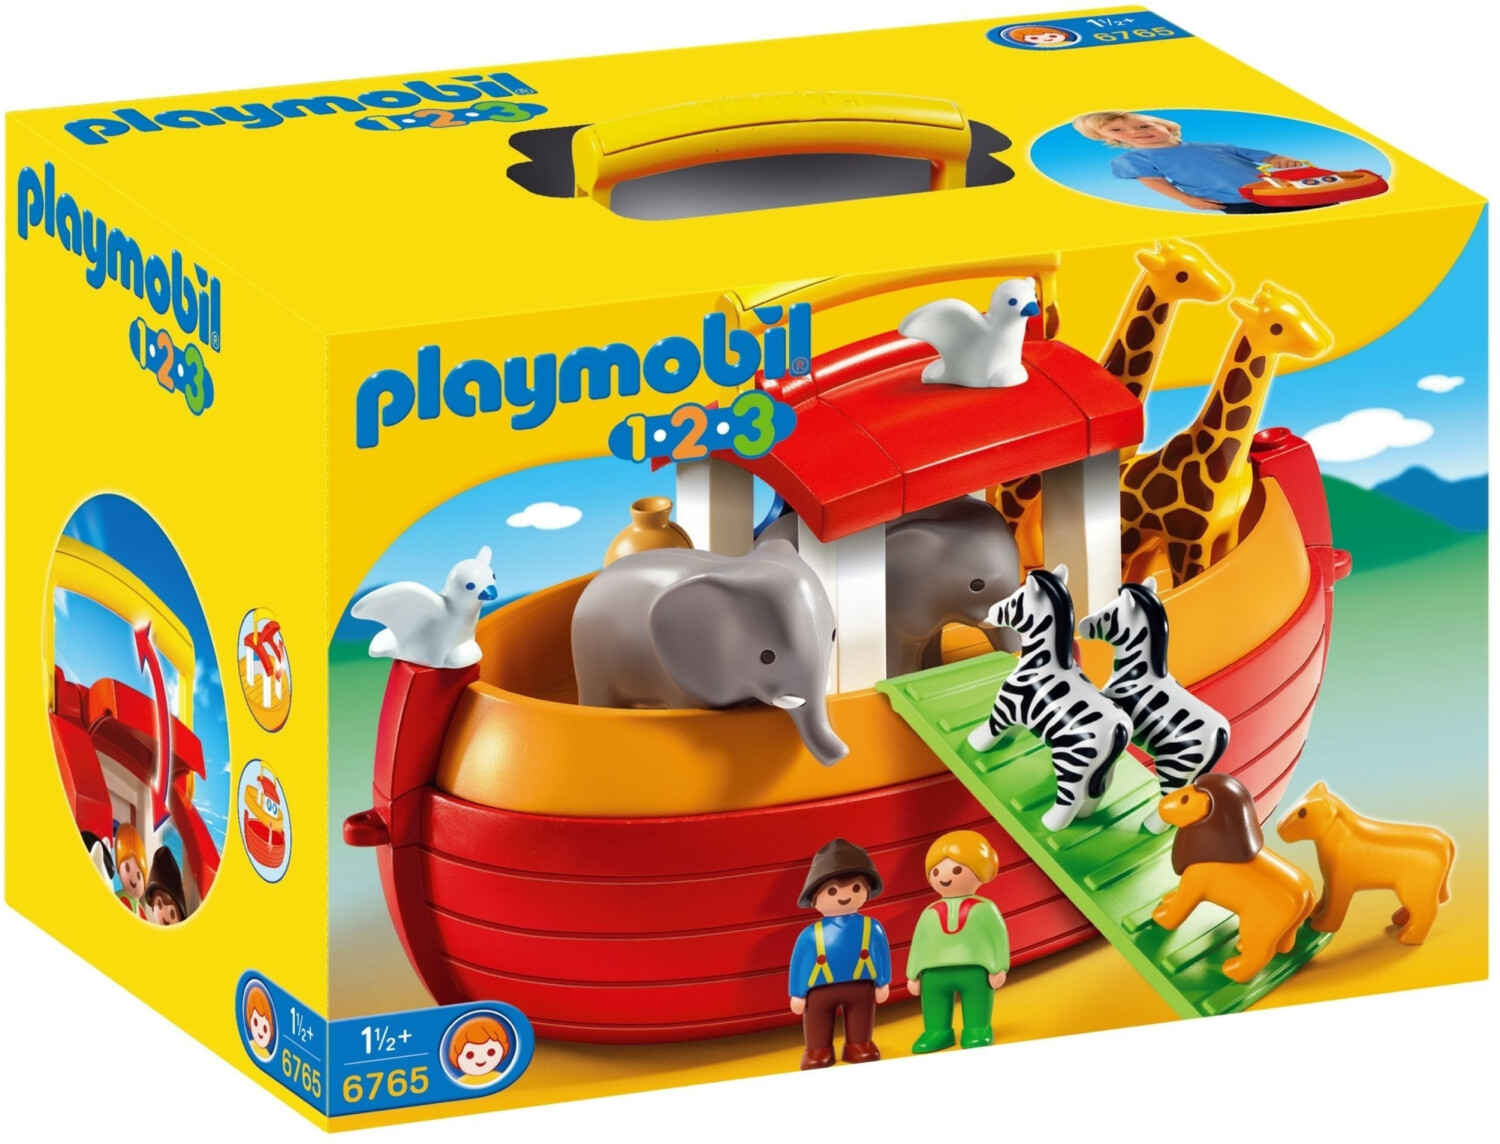 Playmobil Maroc, Achat produits Playmobil à prix pas cher